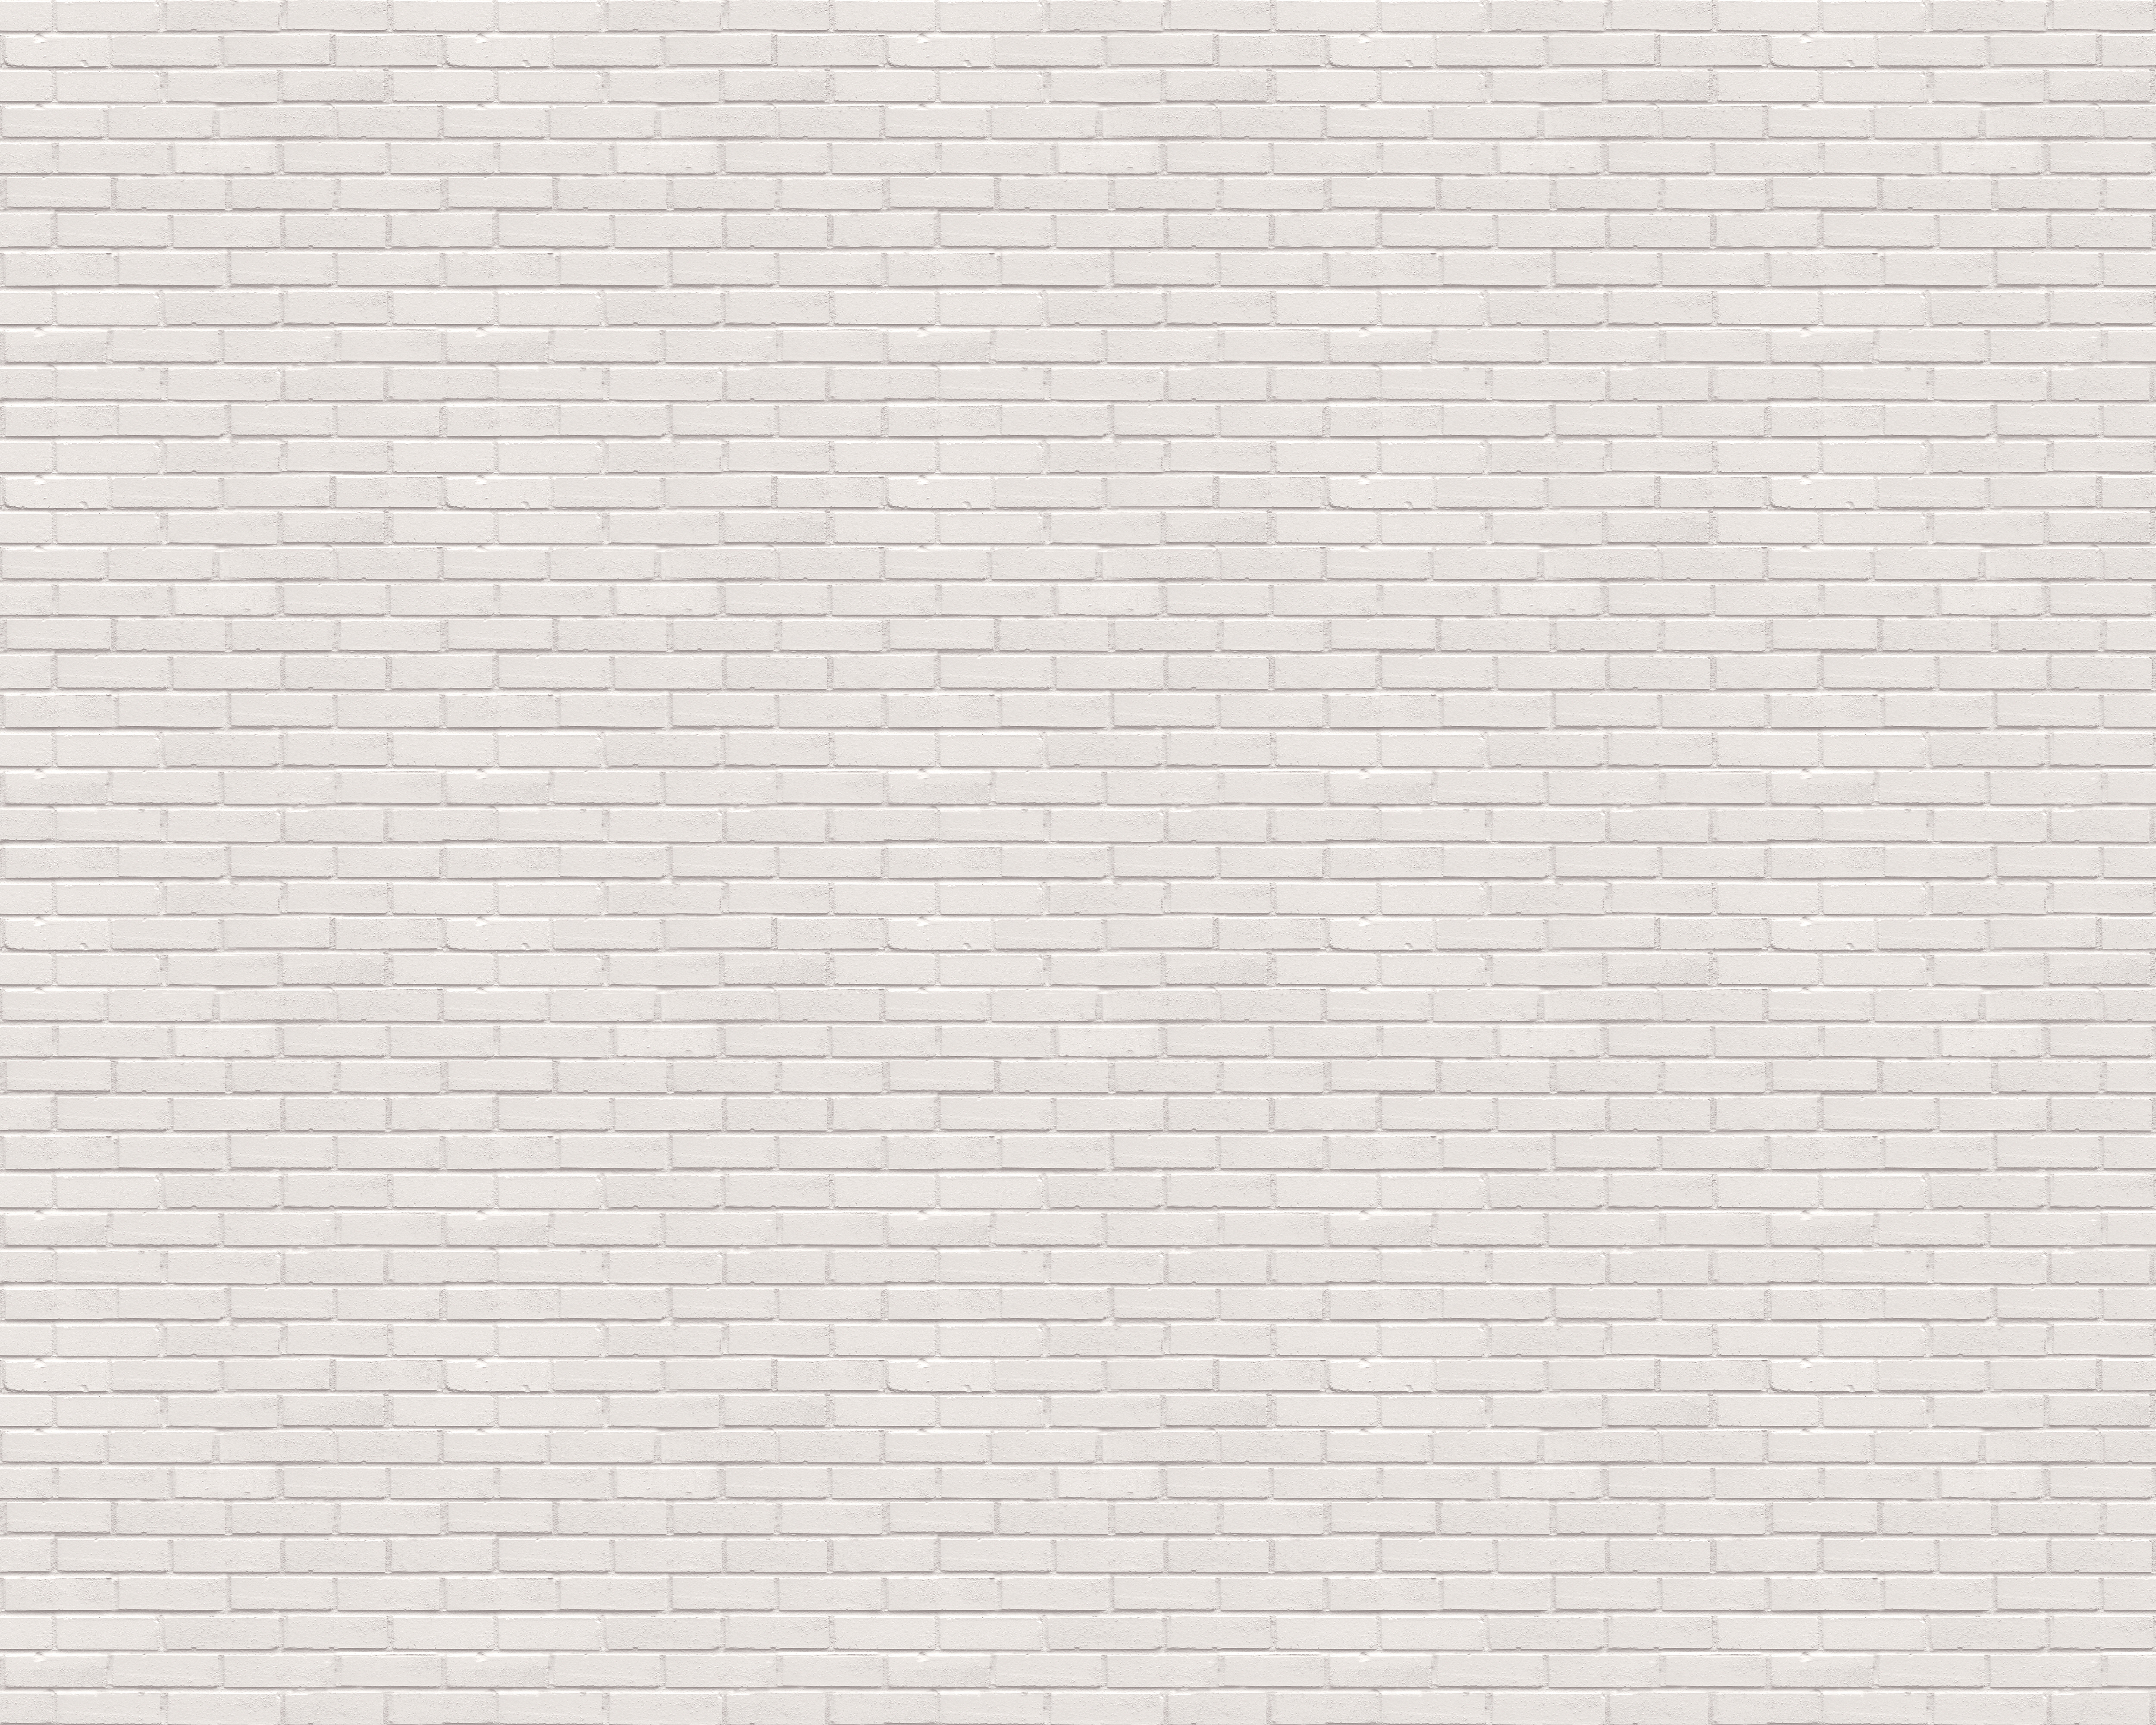 General 5000x4000 wall white background pattern bricks